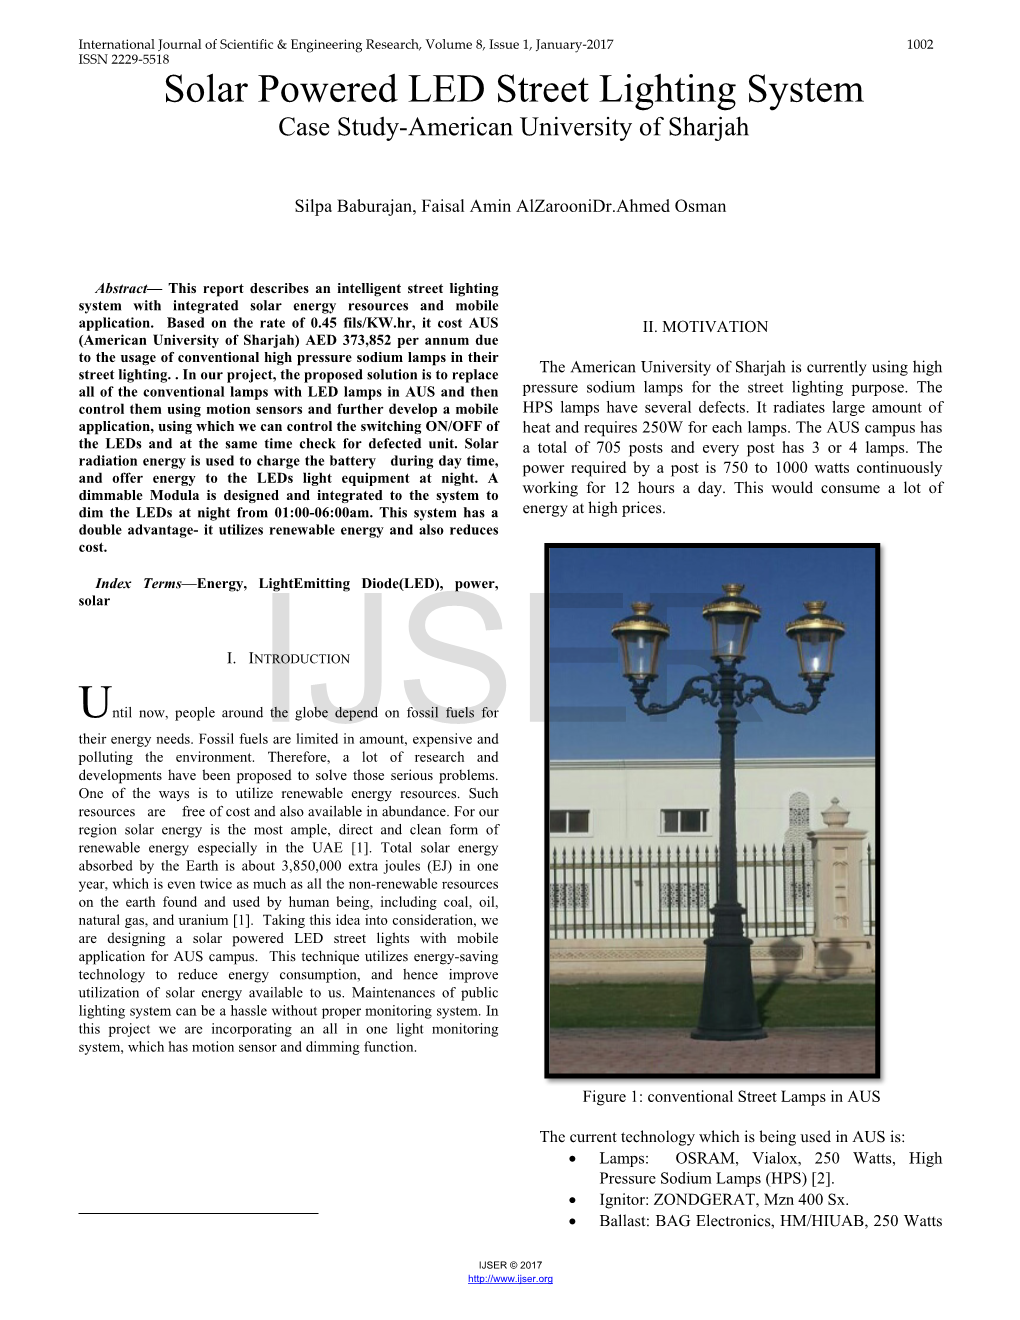 Solar Powered LED Street Lighting System Case Study-American University of Sharjah